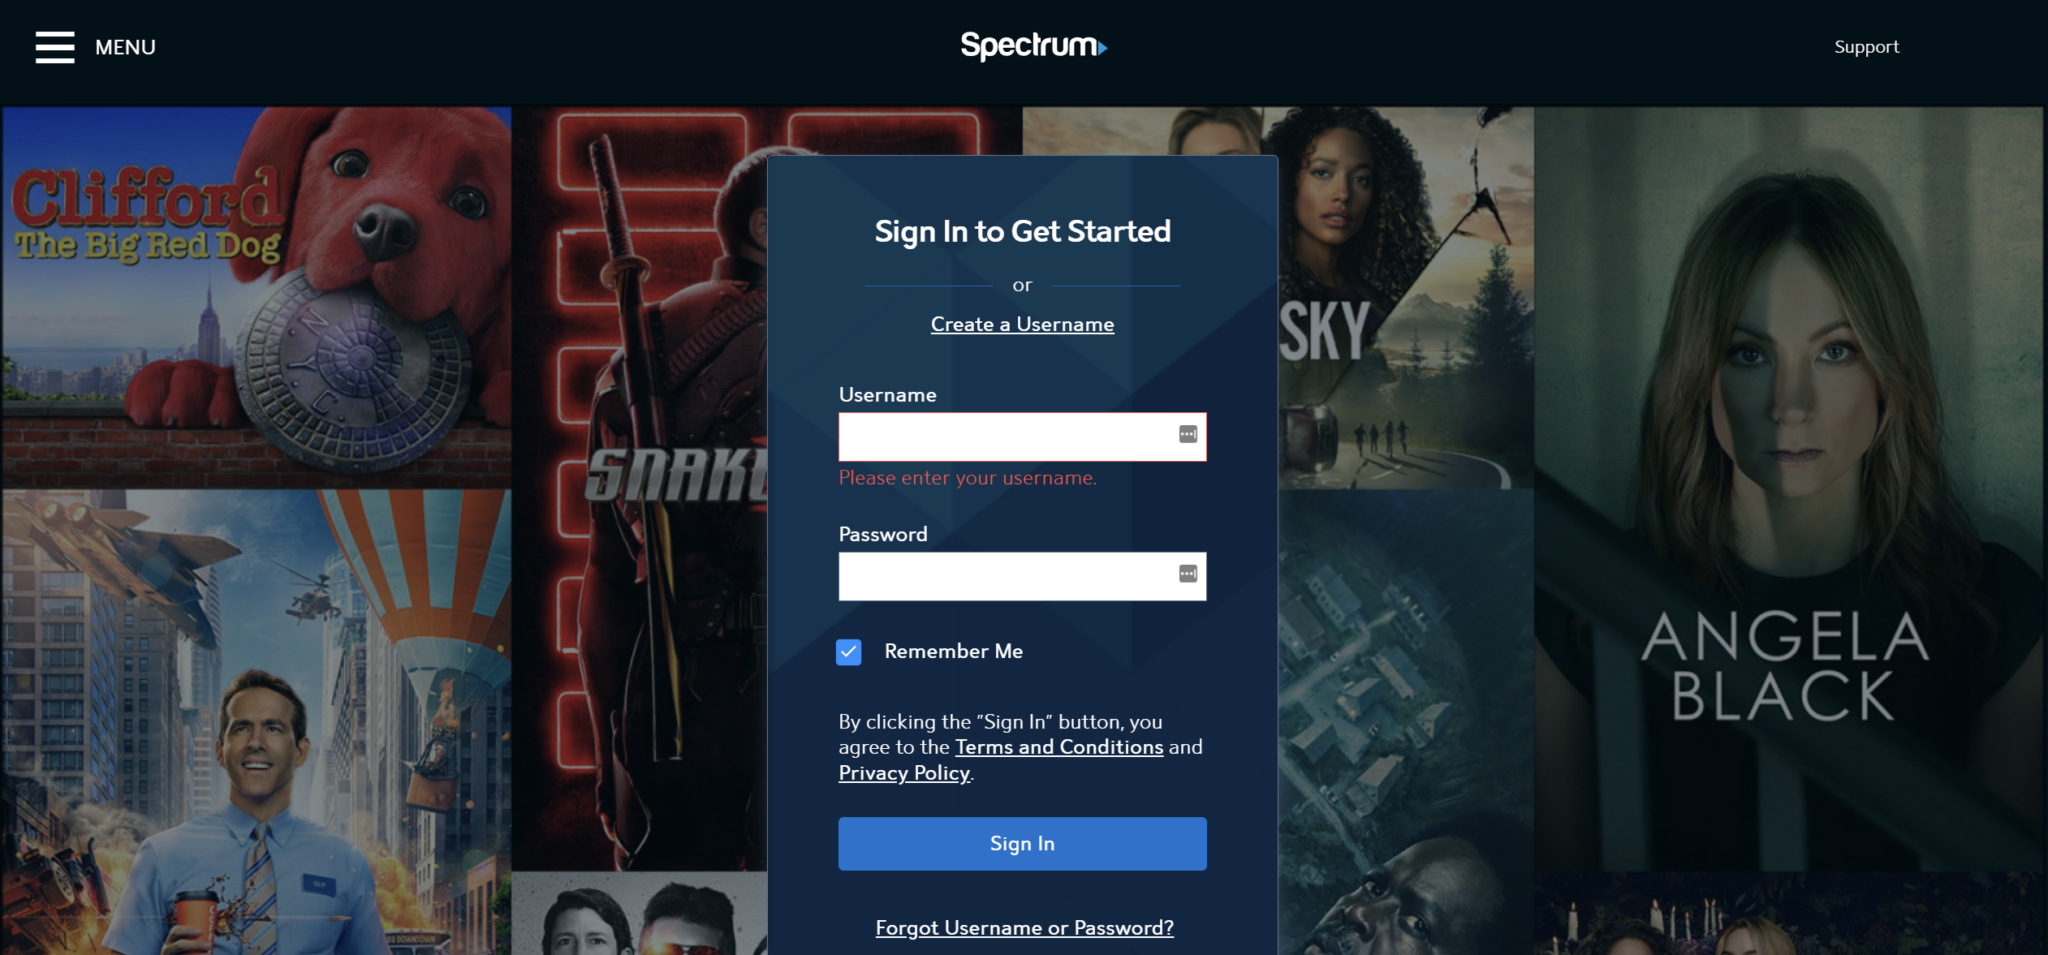 Spectrum TV app login screen on Roku